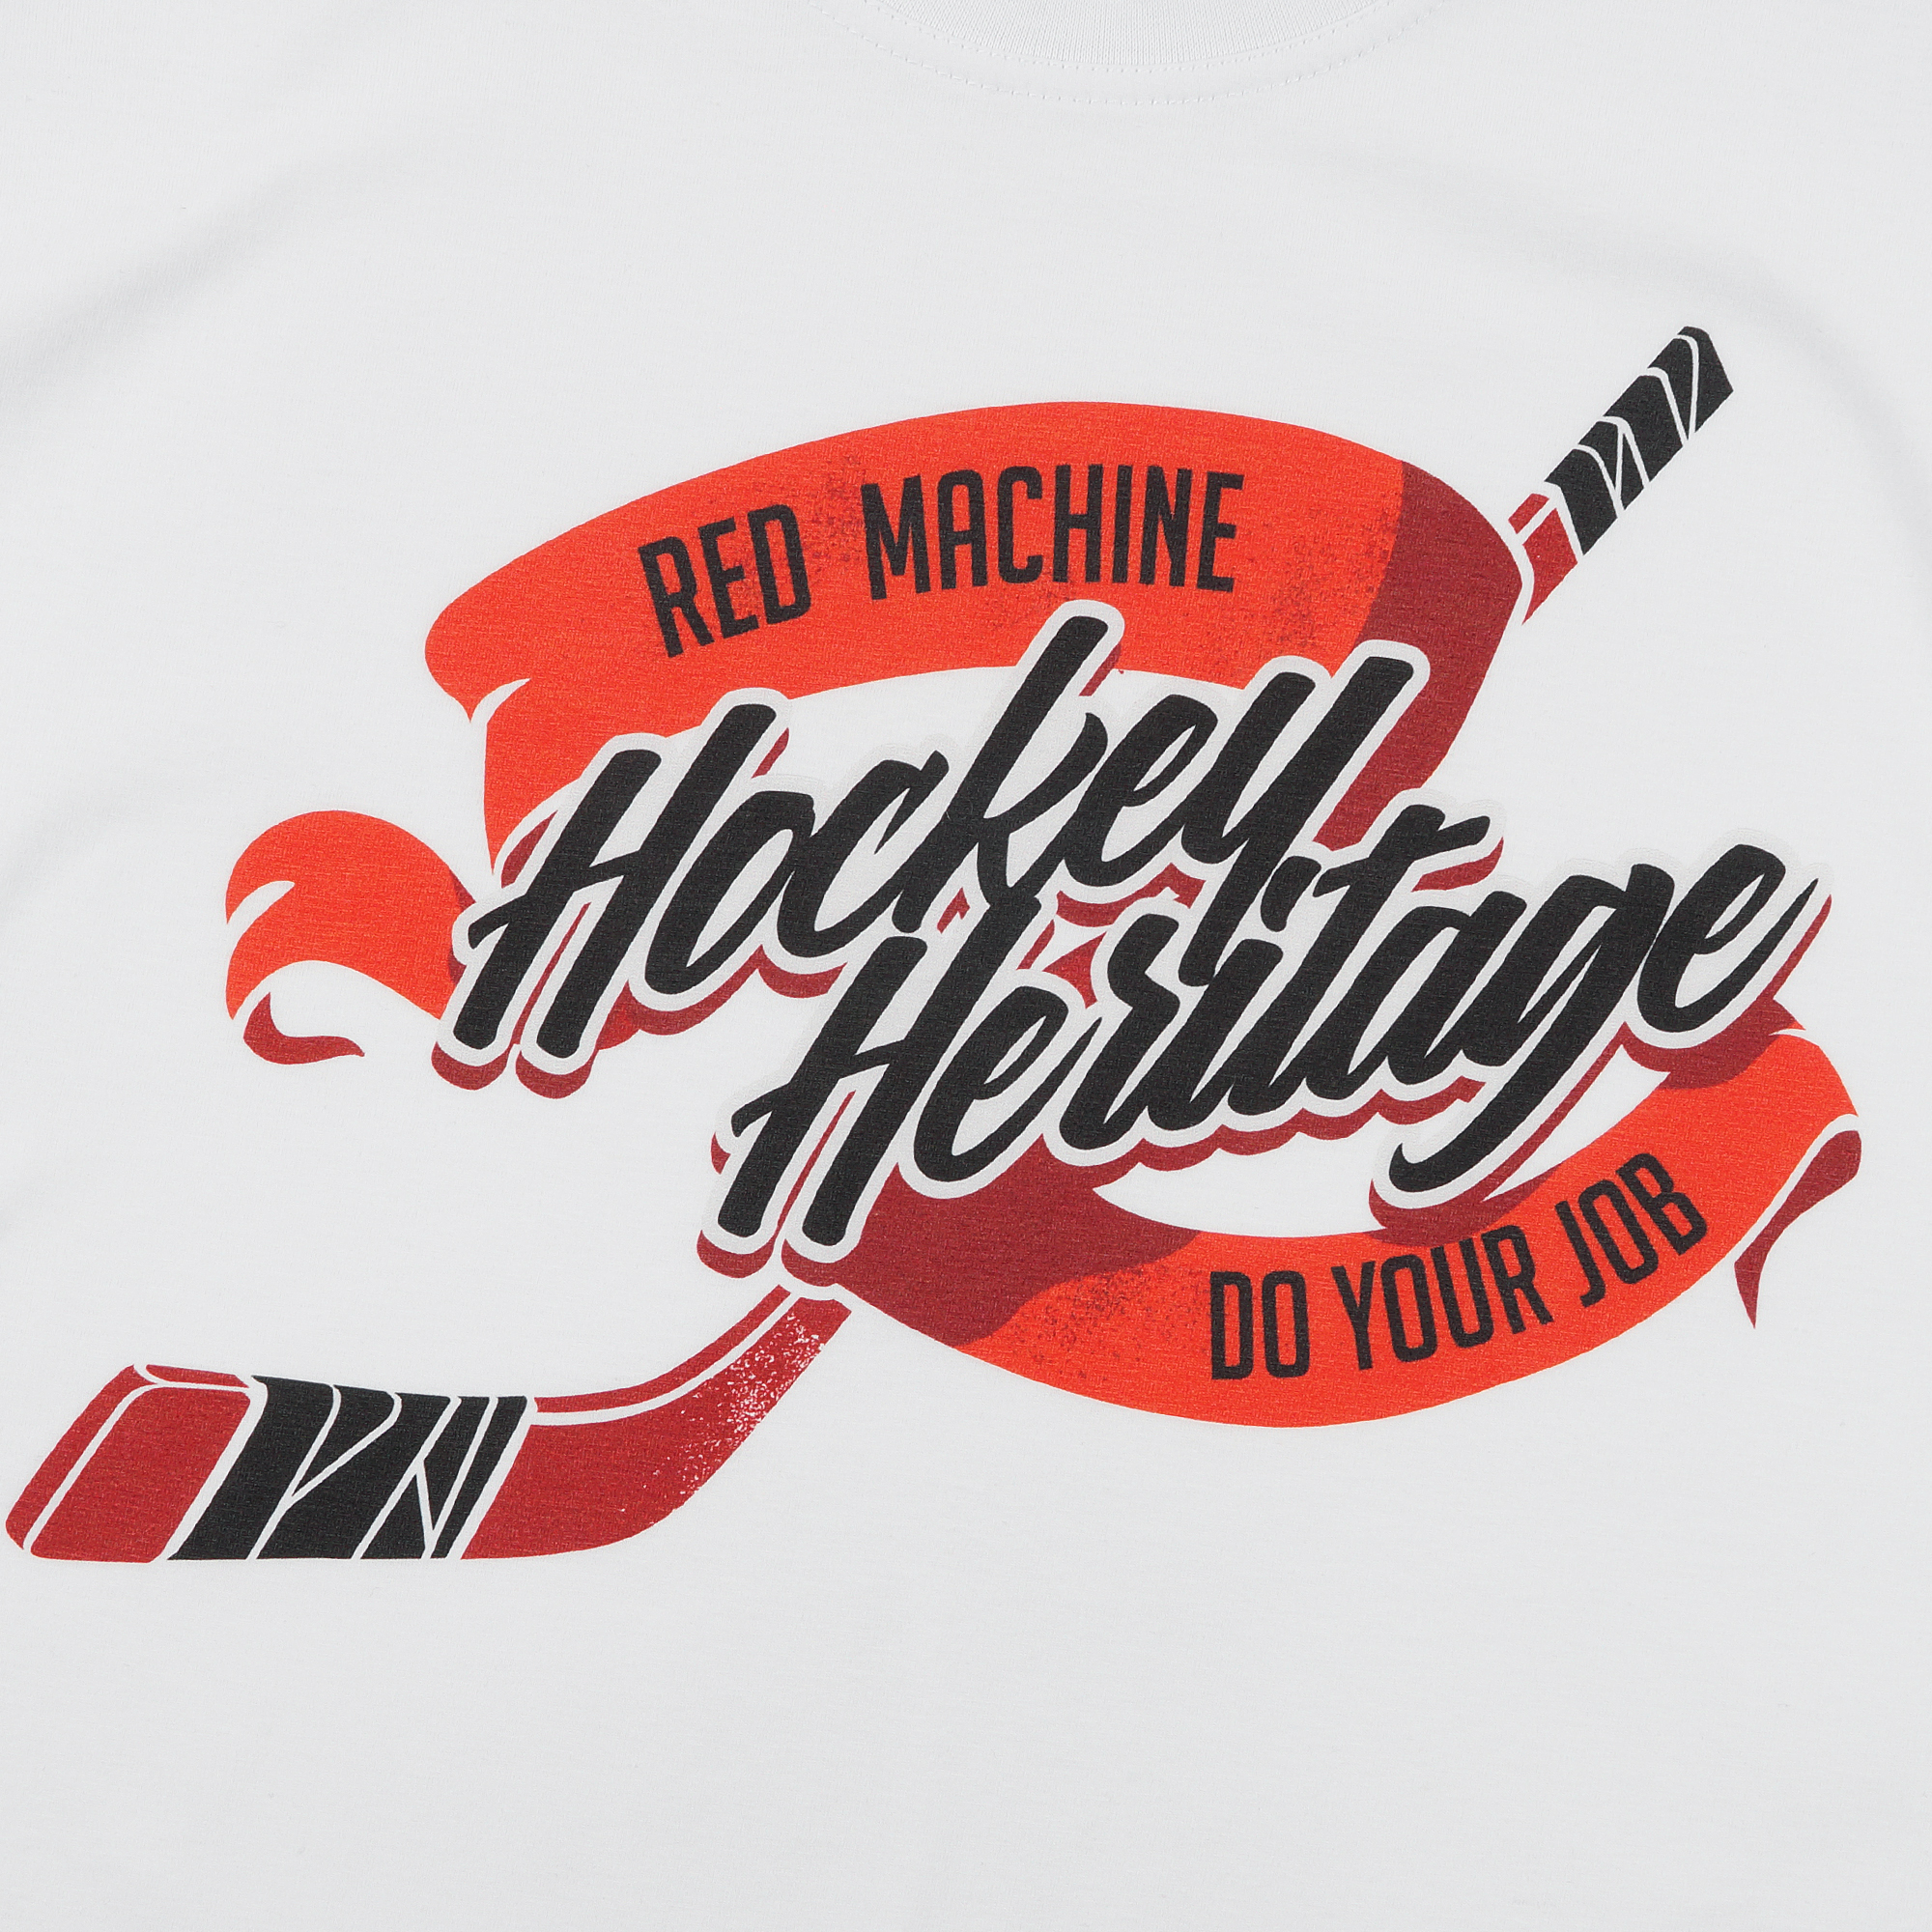 Футболка Red MachIne Hockey Heritage Do Your job белый